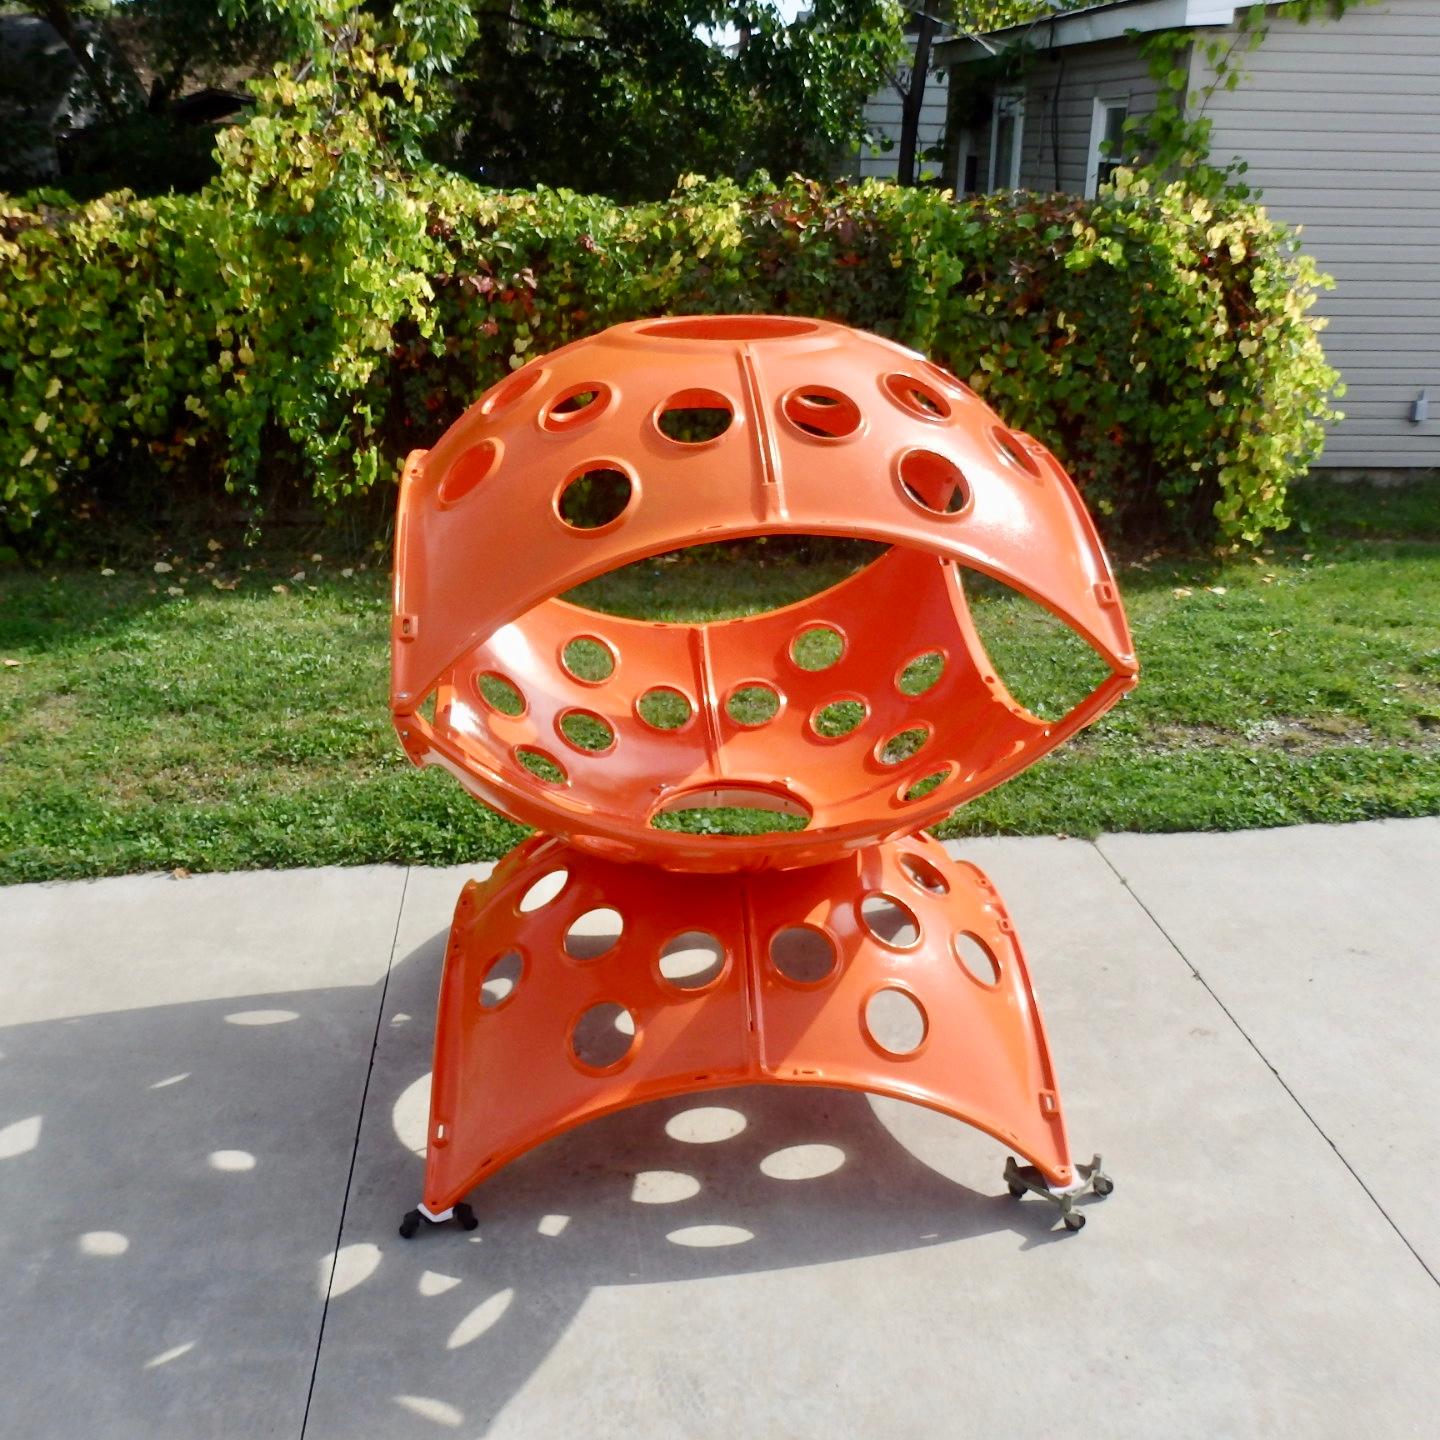 Poudré Grande sculpture modulaire en fonte d'aluminium orange Yard Art Indoor Outdoor Playground Sculpture en vente